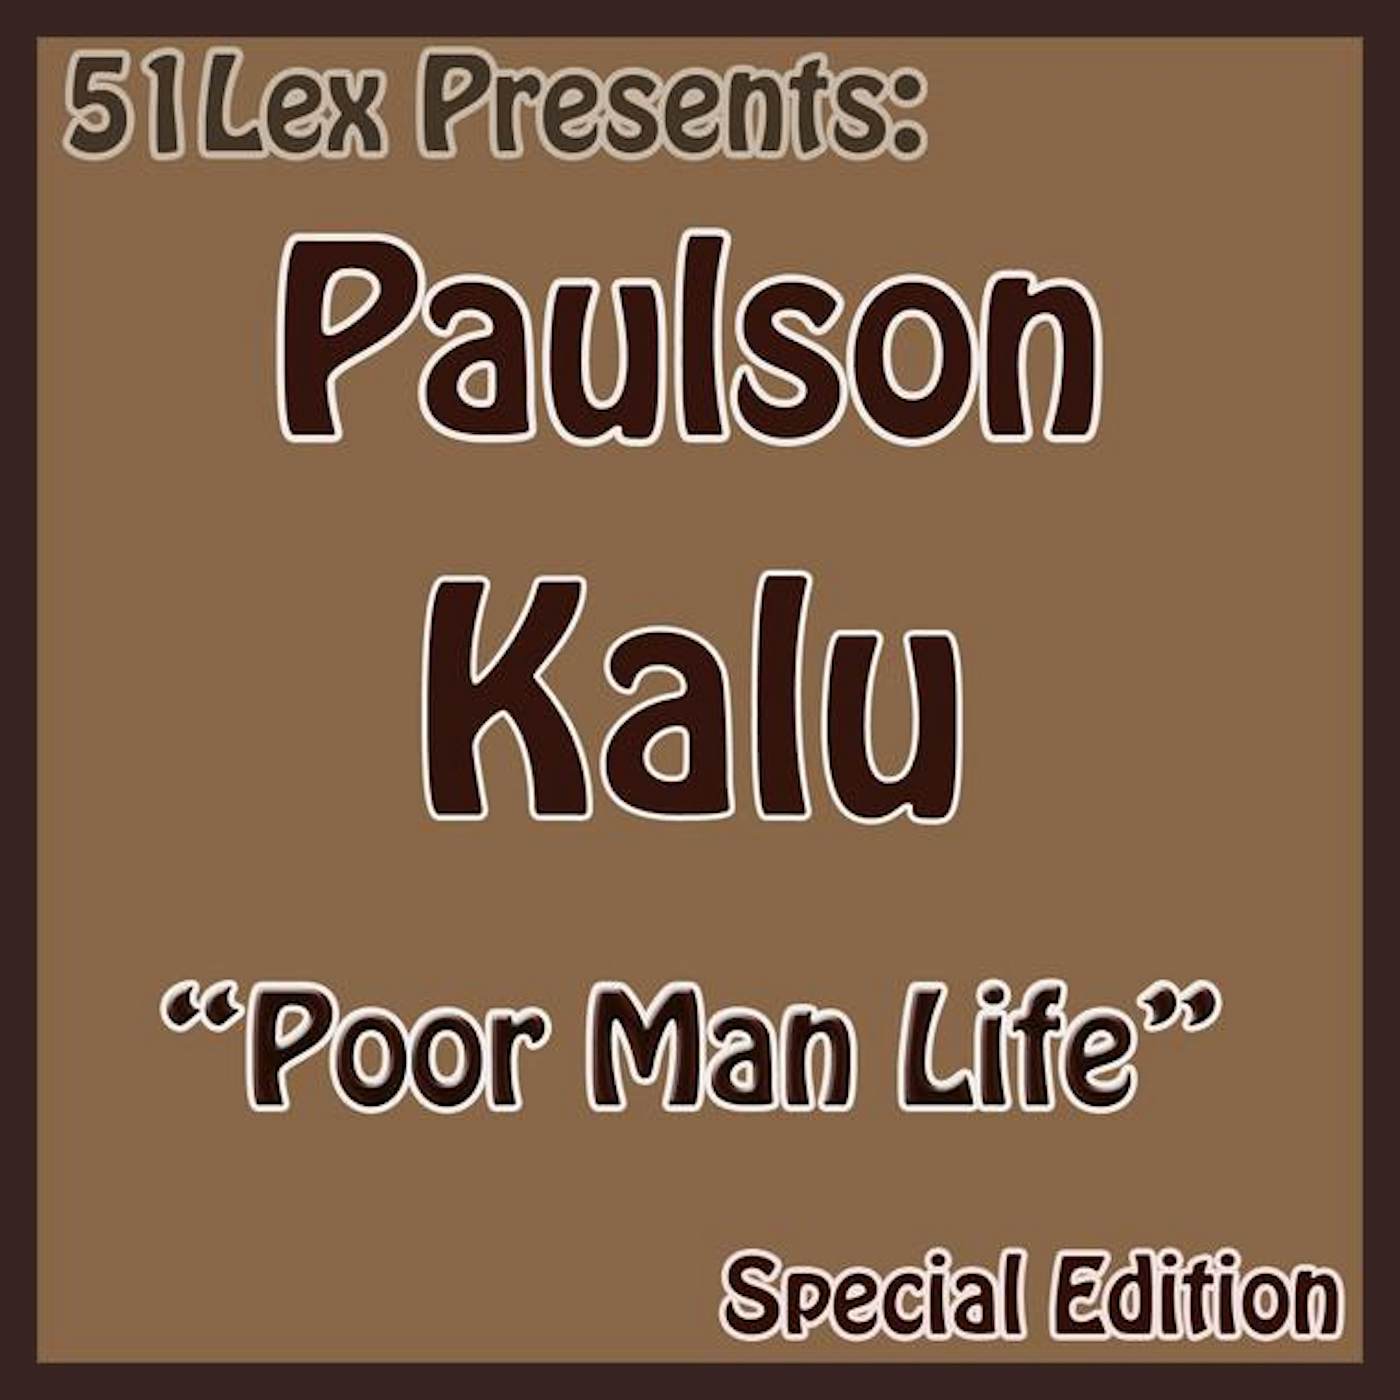 Paulson Kalu